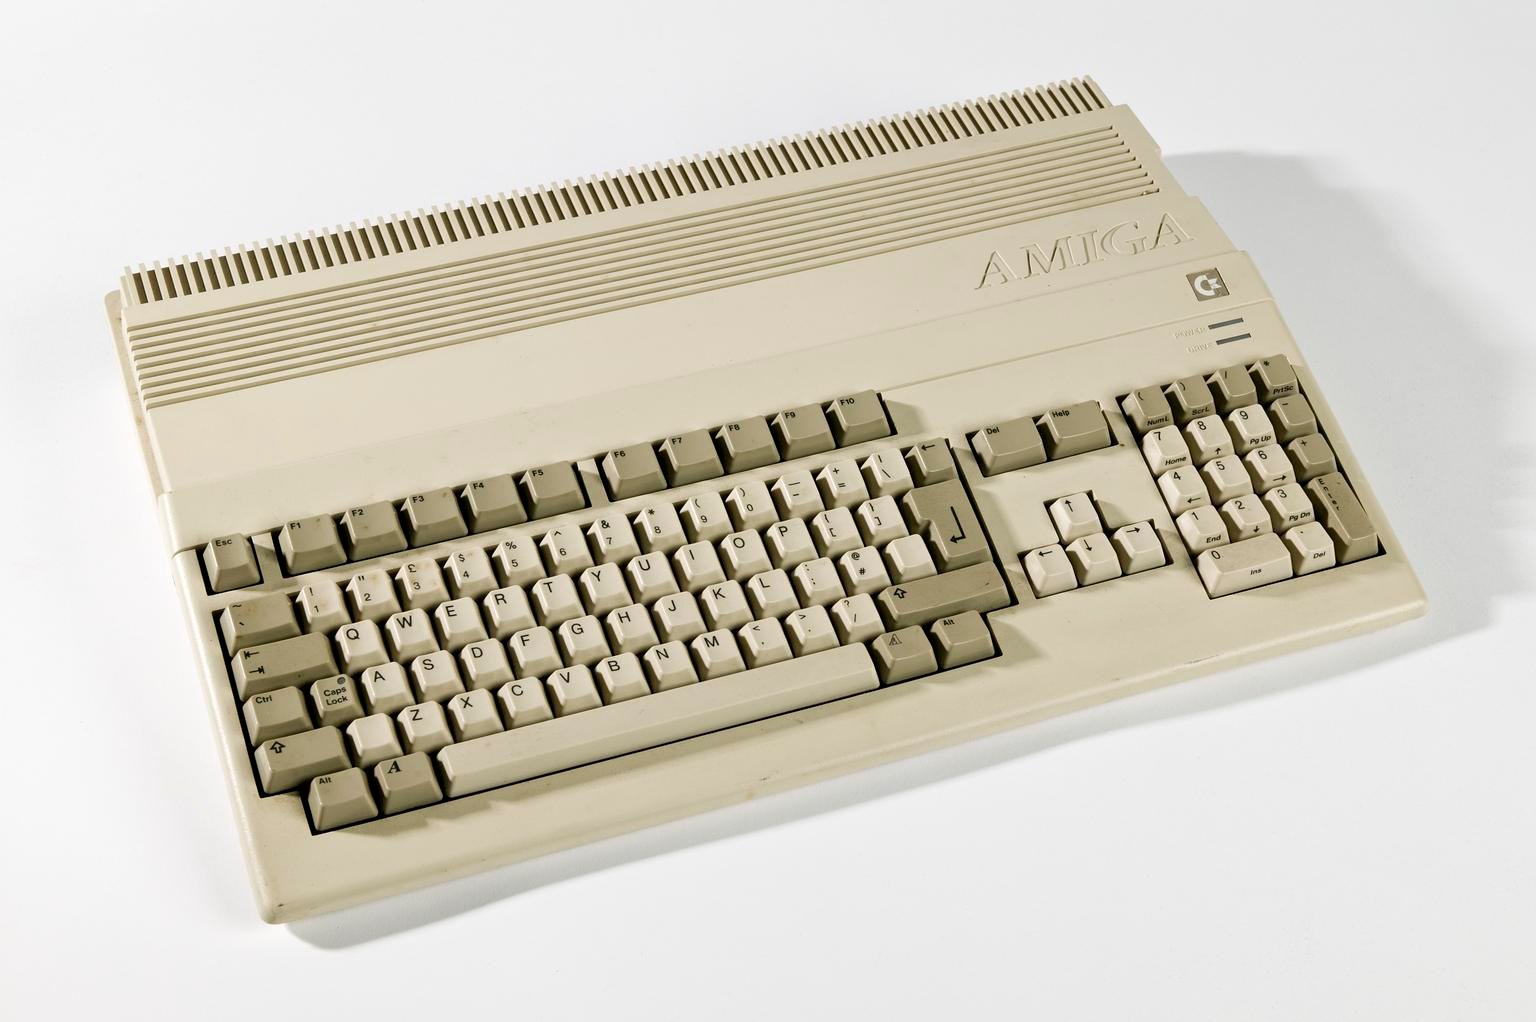 Commodore Amiga 500 microcomputer with power supply unit (microcomputer)